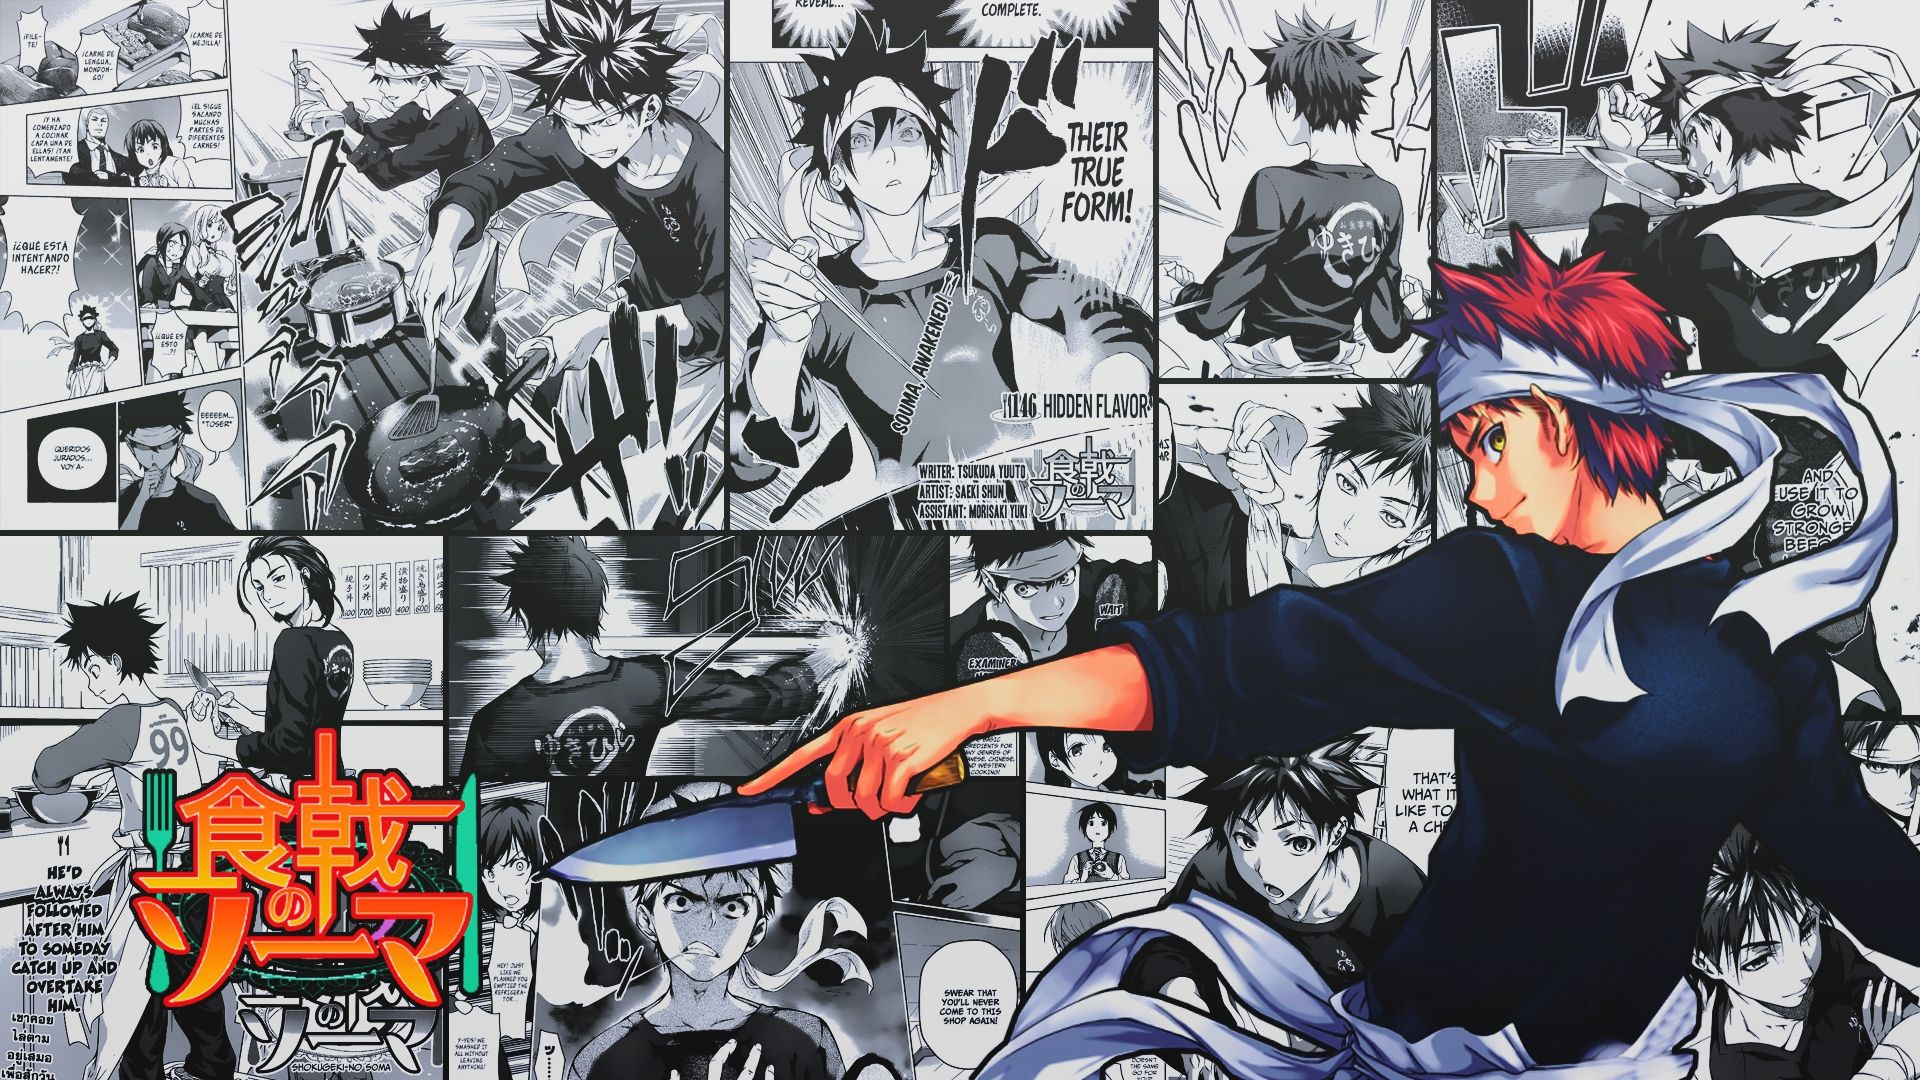 Anime Food Wars: Shokugeki no Soma HD Wallpaper by minya1995